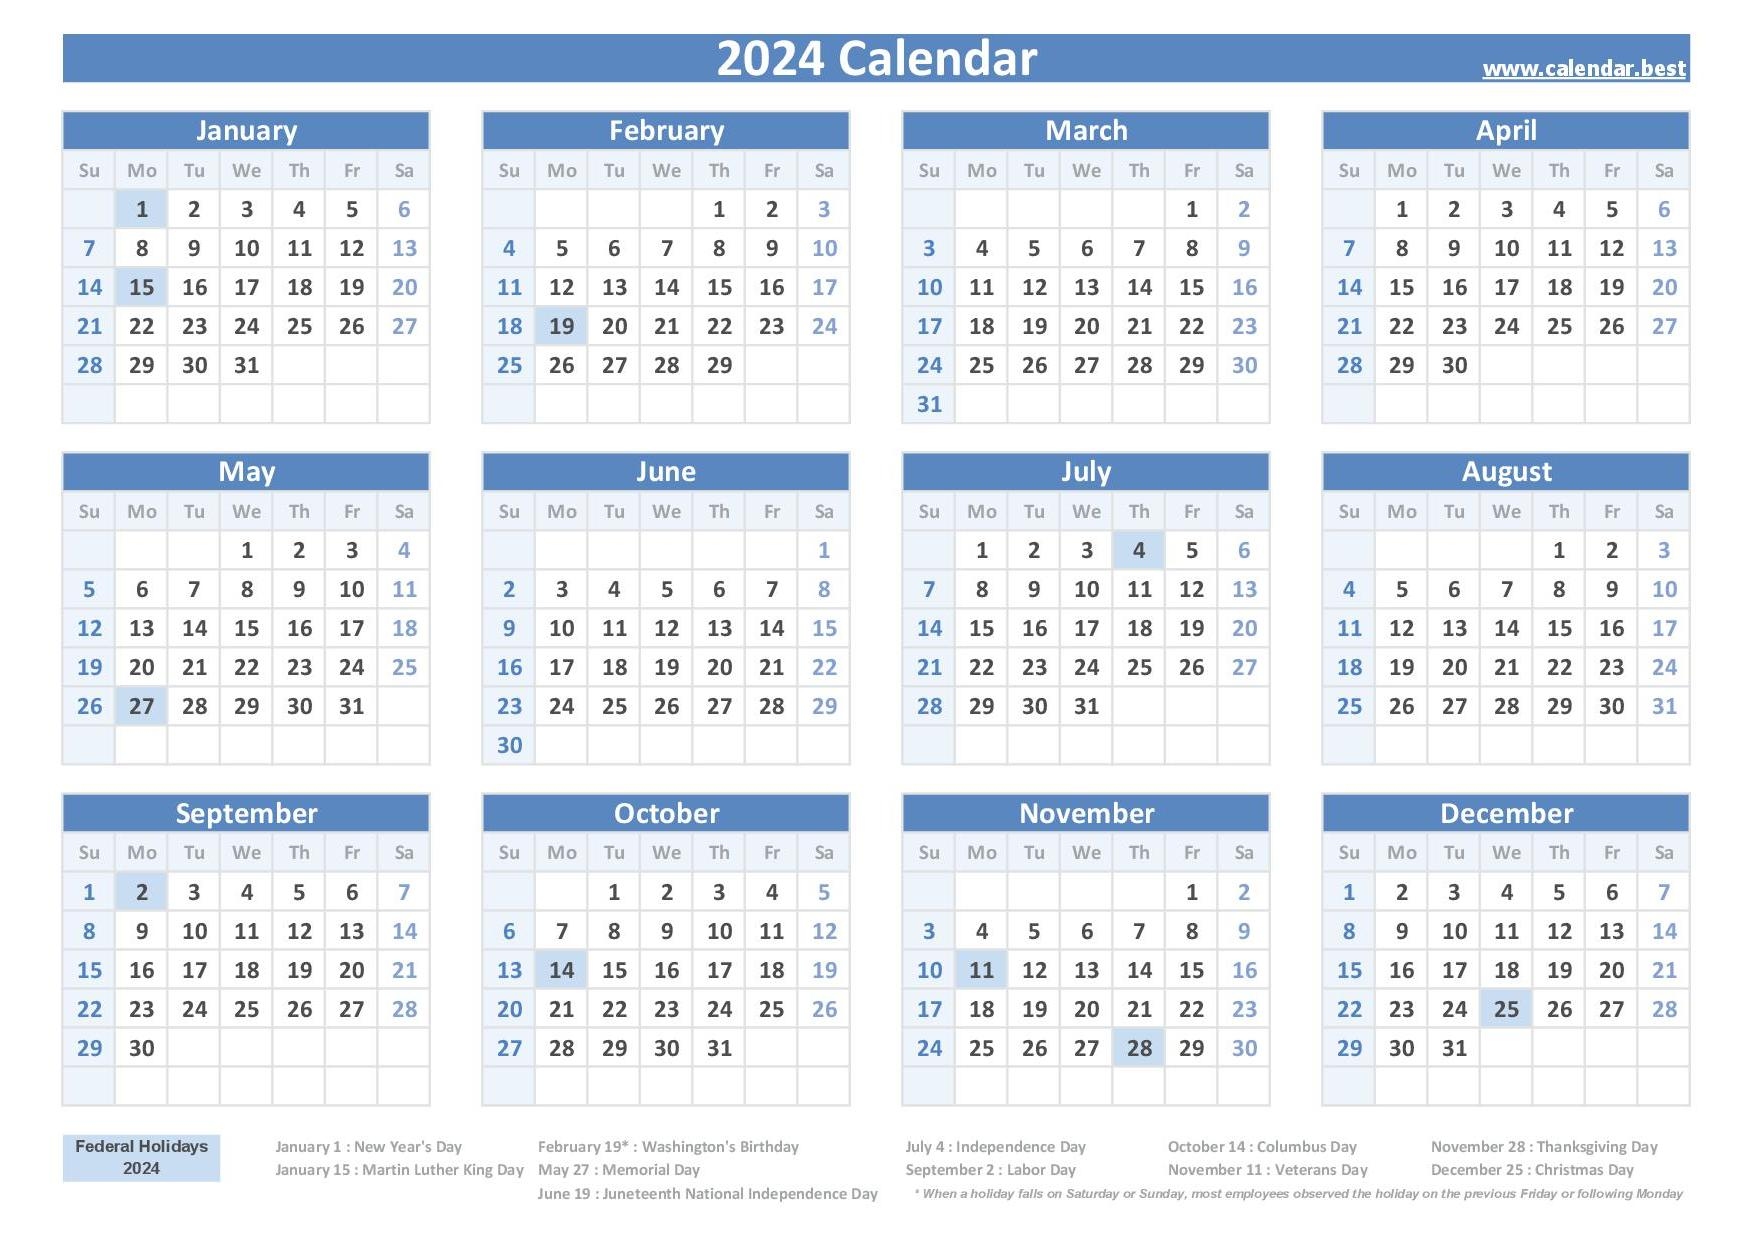 2024 Us Federal Holiday Calendar Printable Bill Marjie | Free Printable 2024 Calendar With Holidays Landscape